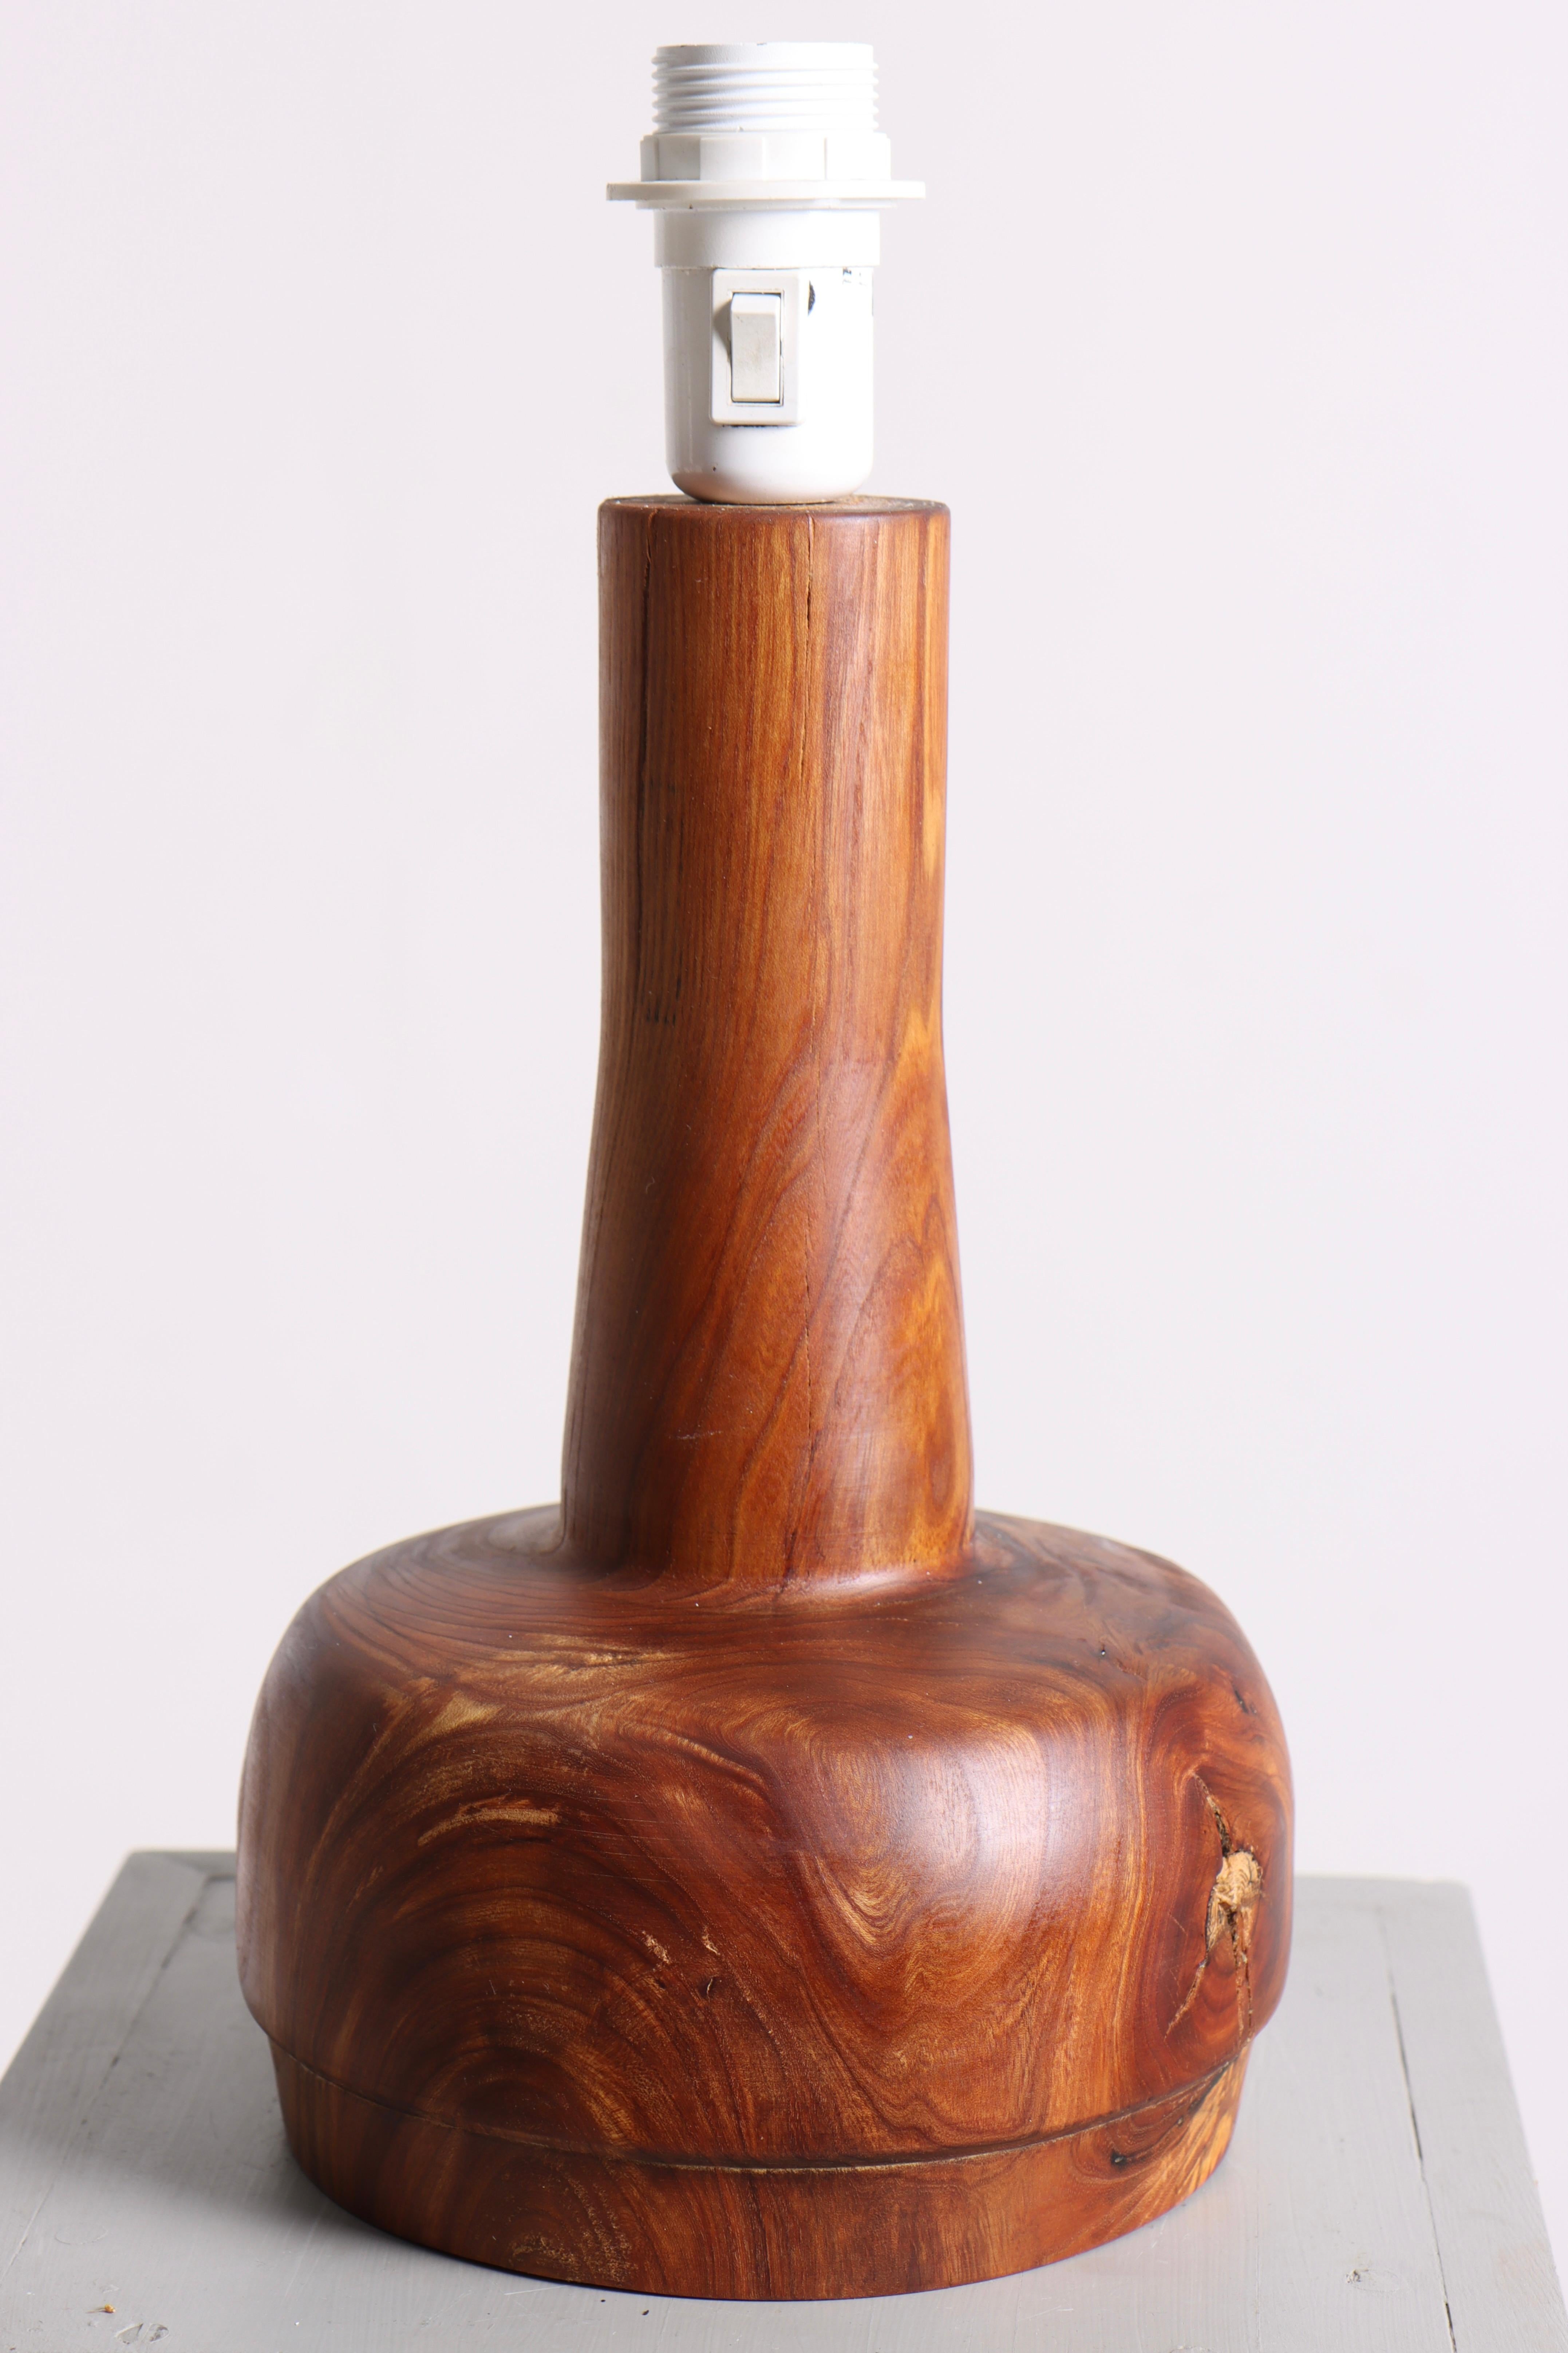 Danish Midcentury Scandinavian Table Lamp in Solid Teak, Made in Denmark, 1960s For Sale